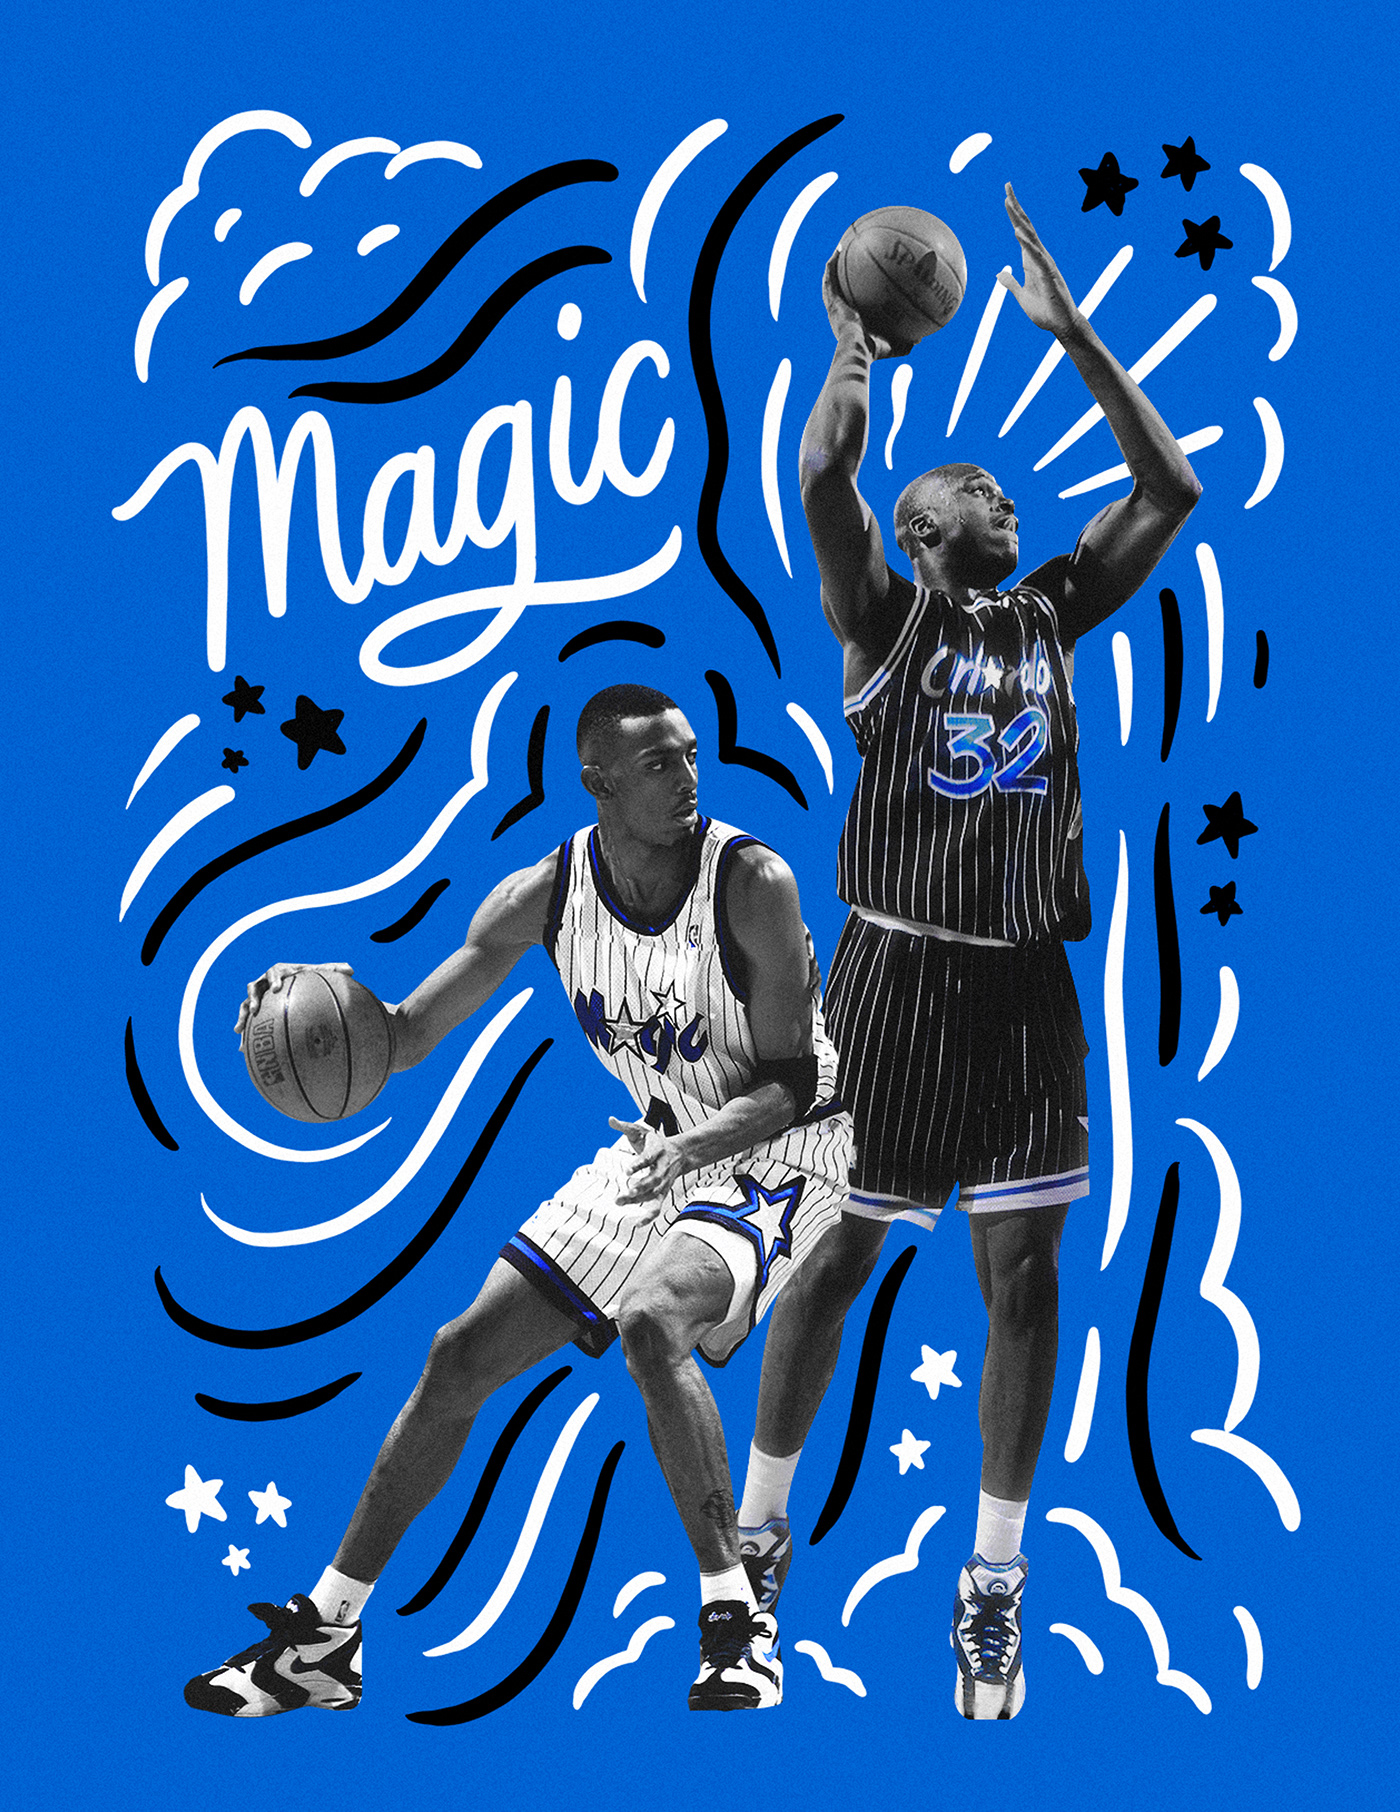 basketball branding  identity logo Magic   orlando Rebrand sports